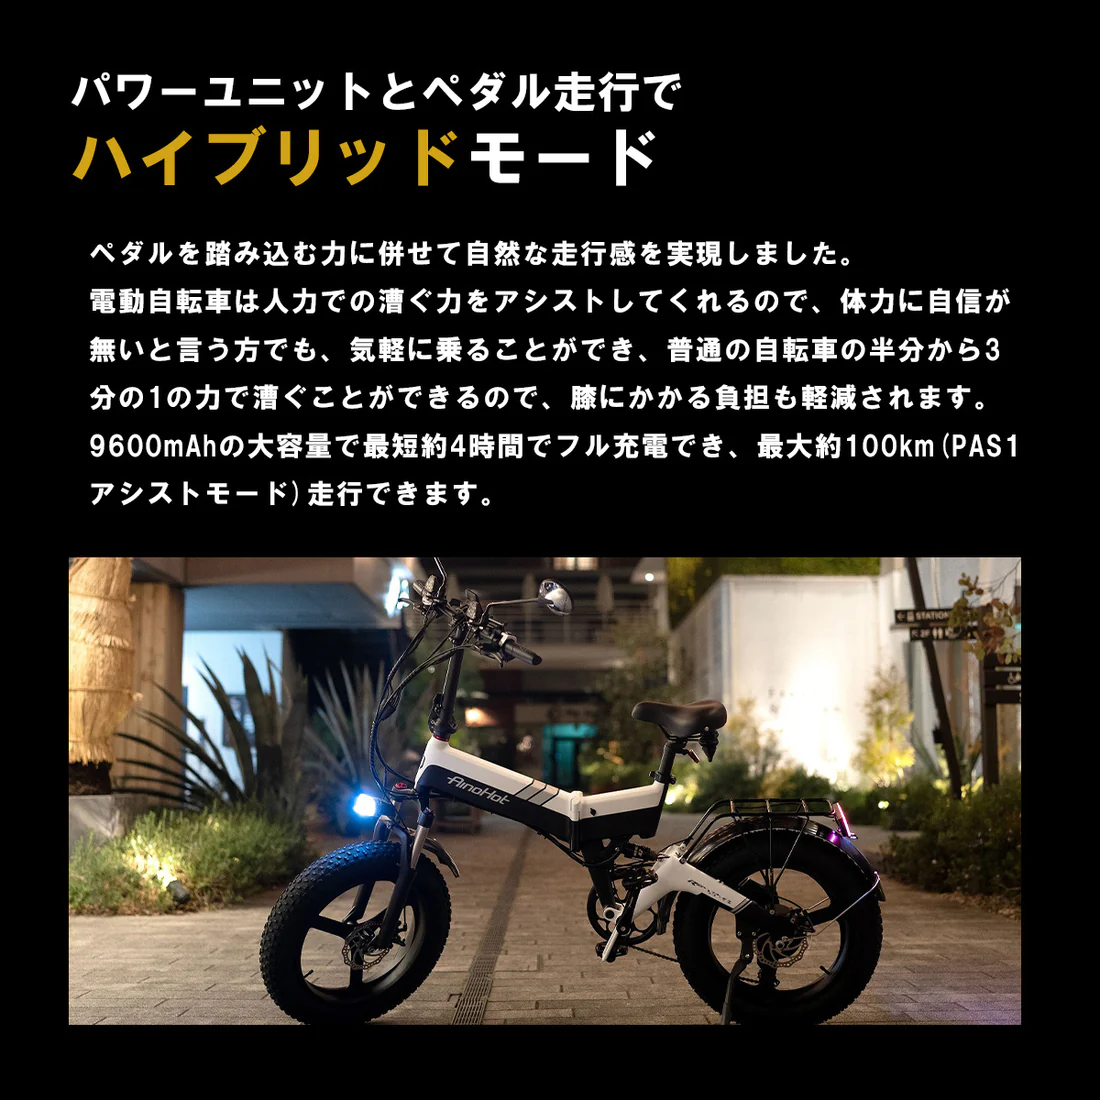 AINOHOT R06 ★3Way 折り畳み電動バイク（原付１種）